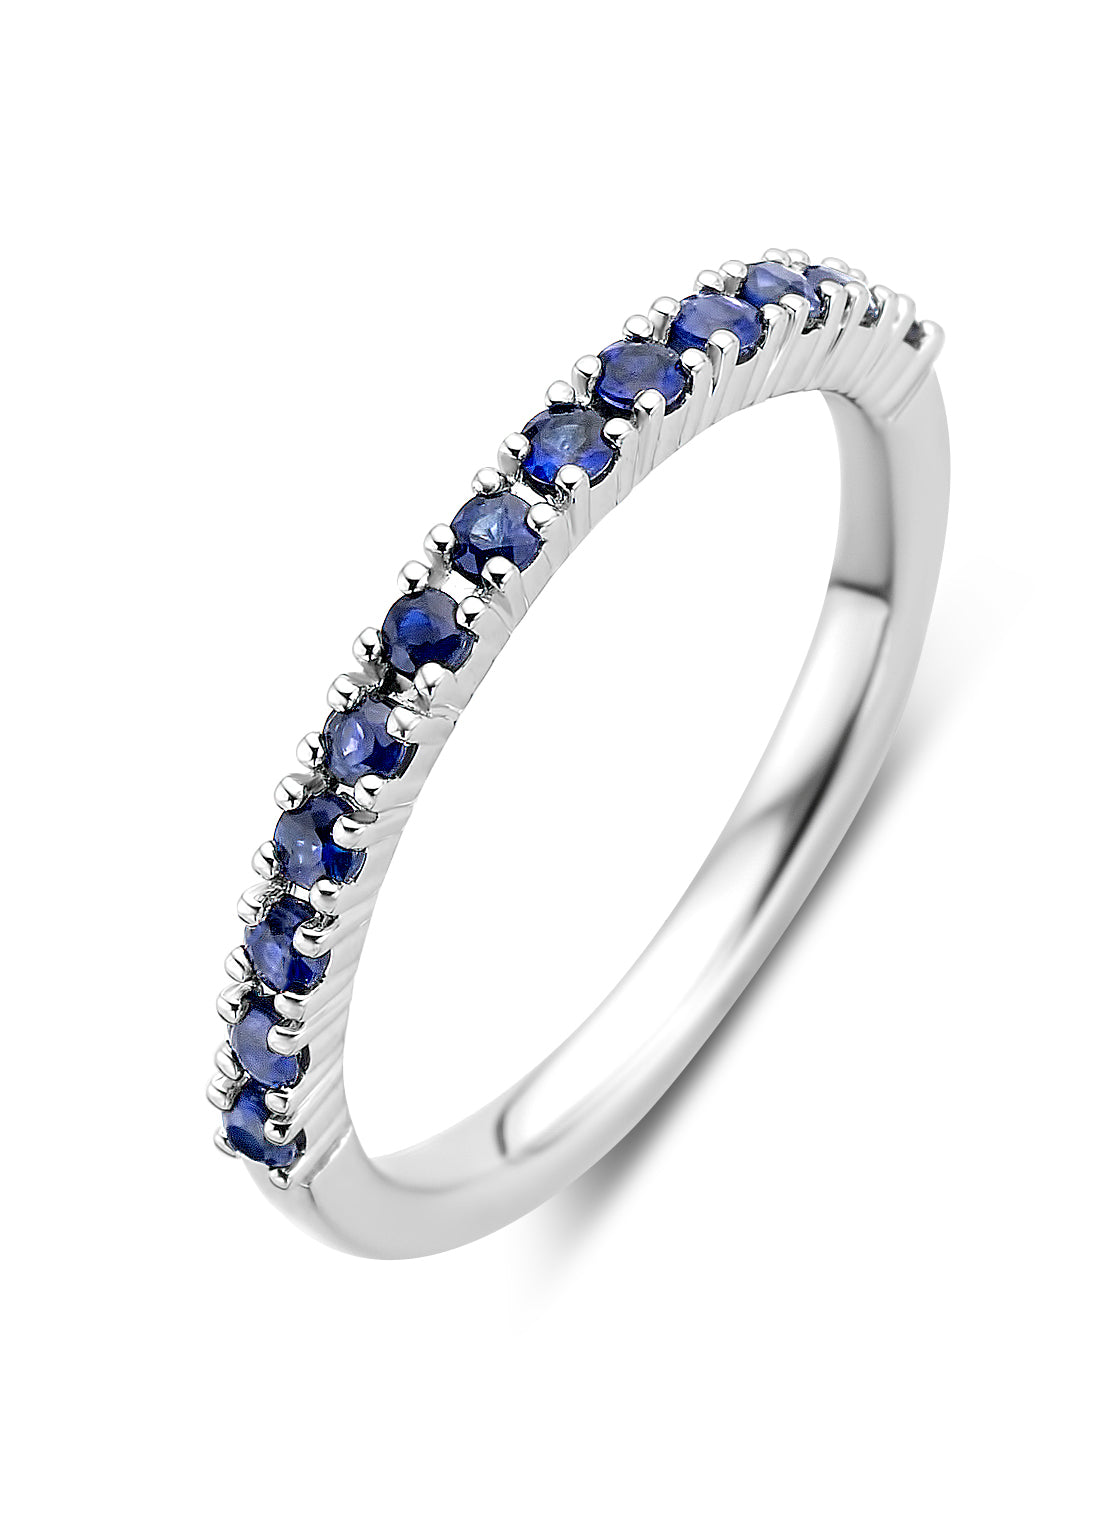 White gold ring, 0.37 ct blue sapphire, ensemble